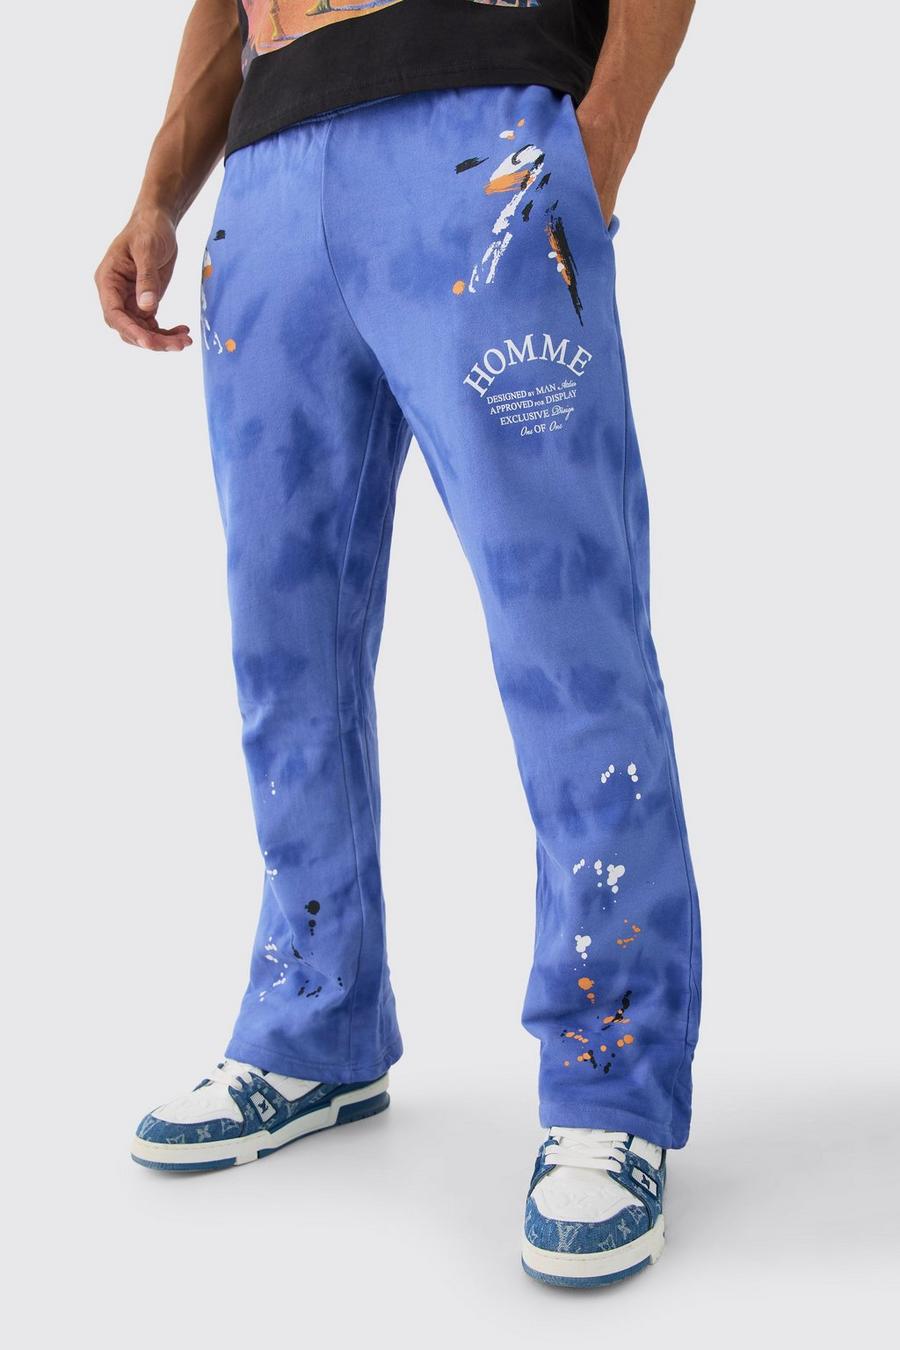 Pantalón deportivo Regular Homme con salpicaduras de pintura y refuerzo, Blue